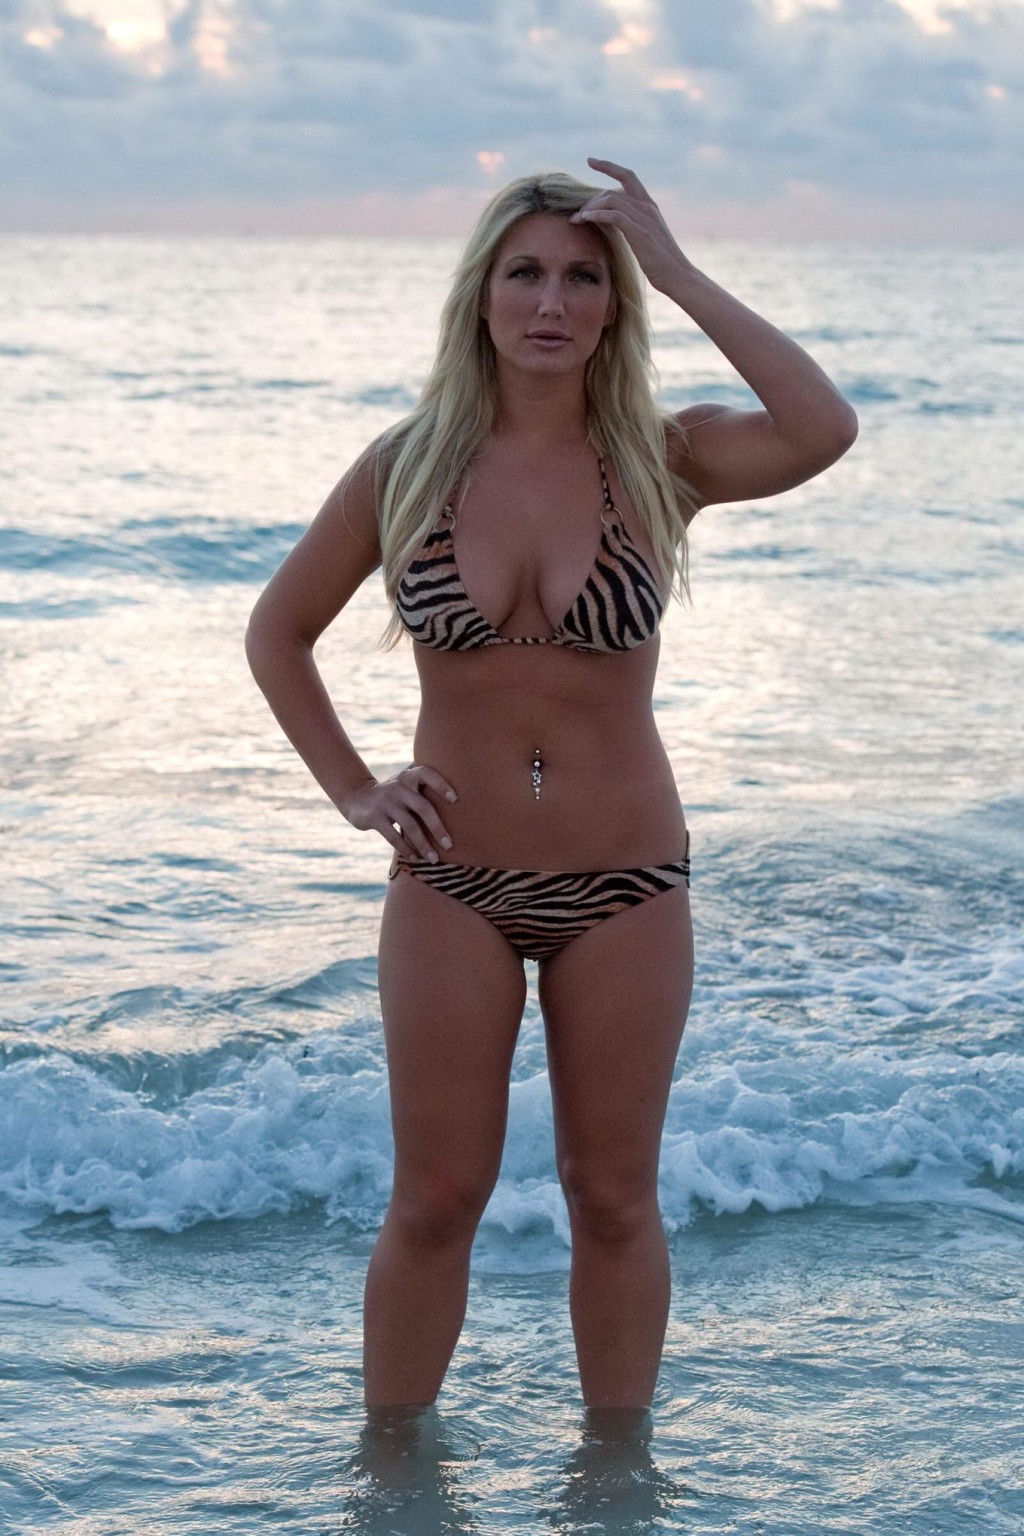 Brooke hogan en buste lors du photoshoot en bikini sur la plage de miami
 #75325207